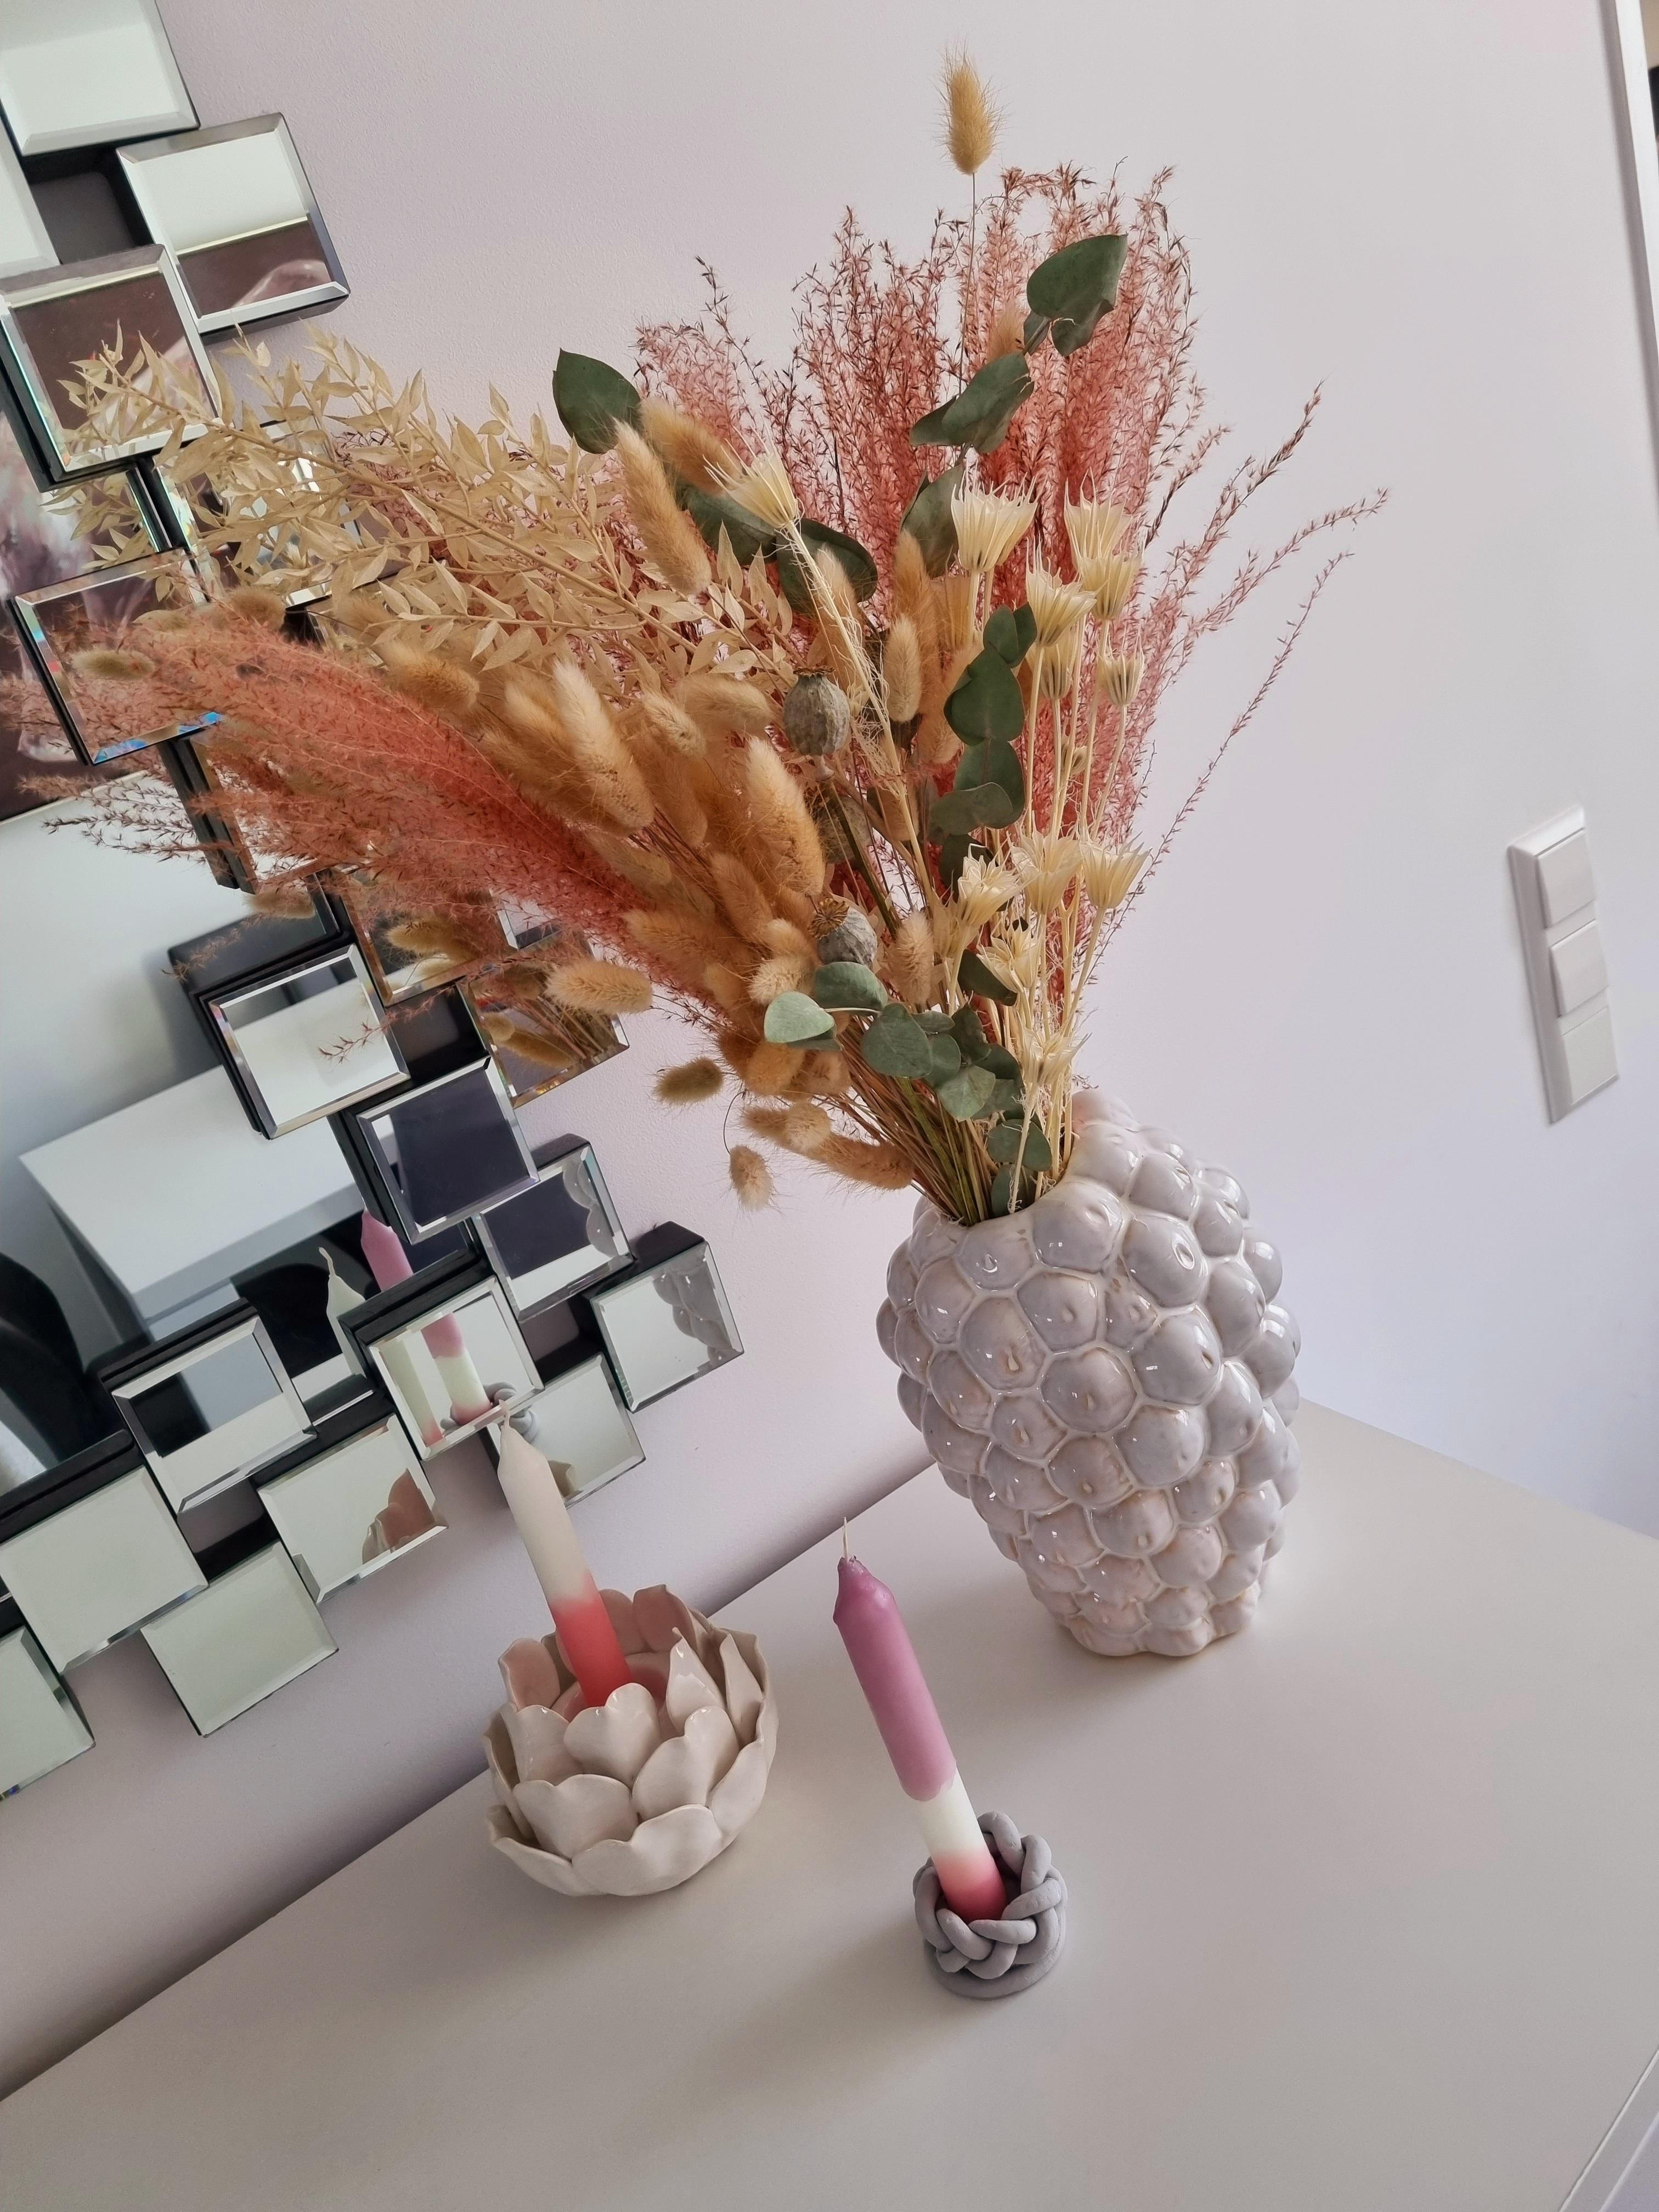 Krative Stunde. Kerzen färben, Kerzenhalter modellieren, Strauß arrangieren 💪
#trockenblumen #kerzen #vase #DIY #interi